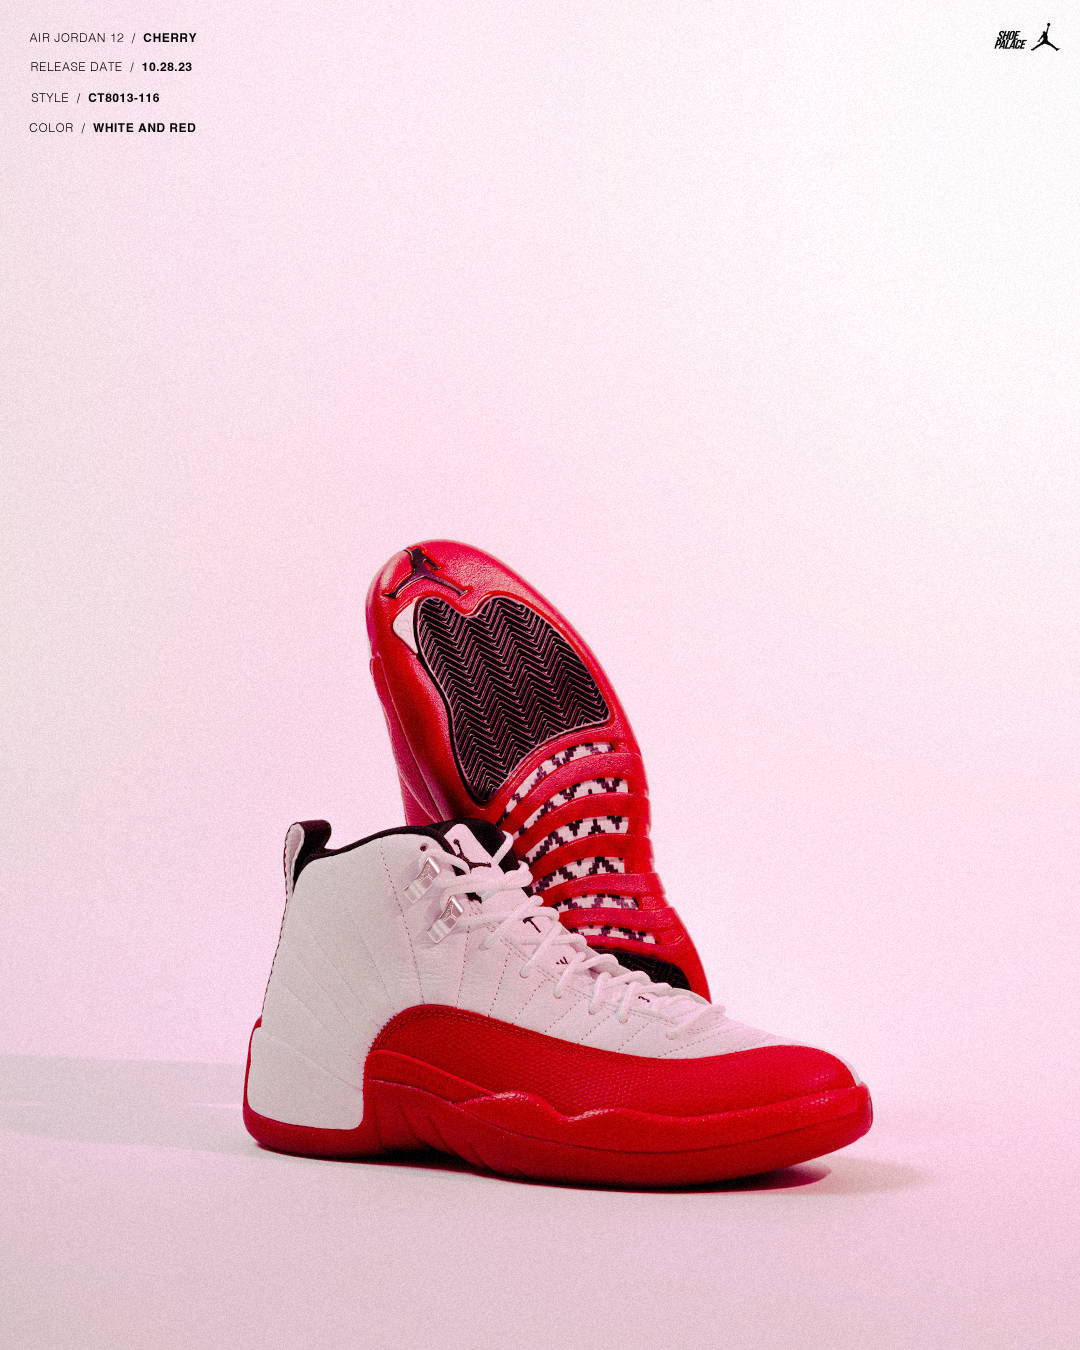 The Air Jordan 12 “Cherry”